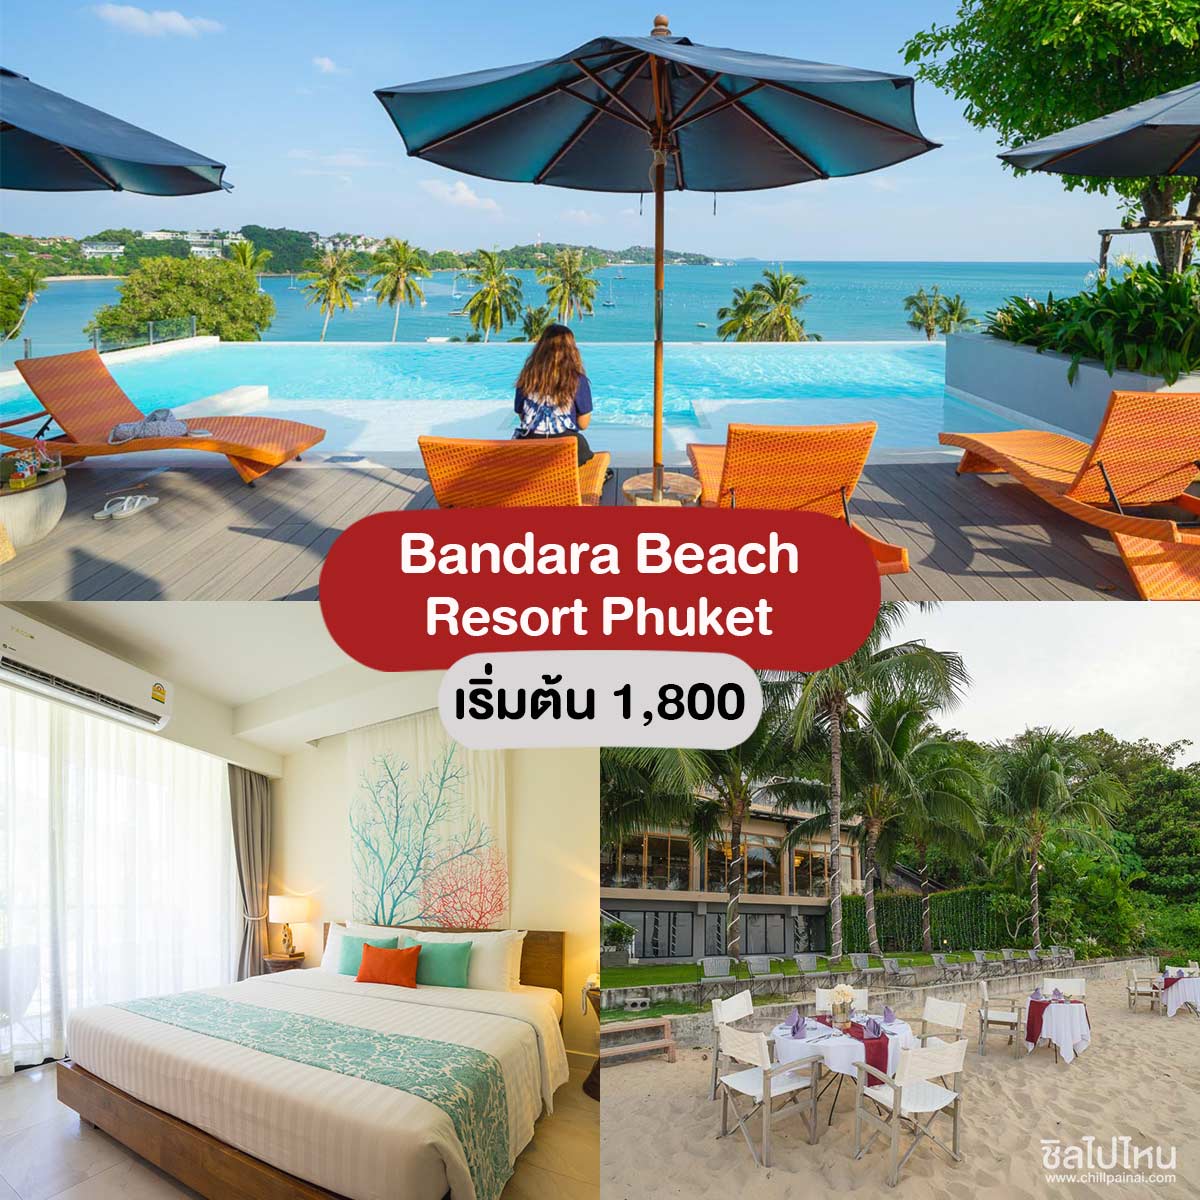 Bandara Beach Resort Phuket (บัญดารา บีช รีสอร์ท) - ที่พักภูเก็ตวิวทะเล